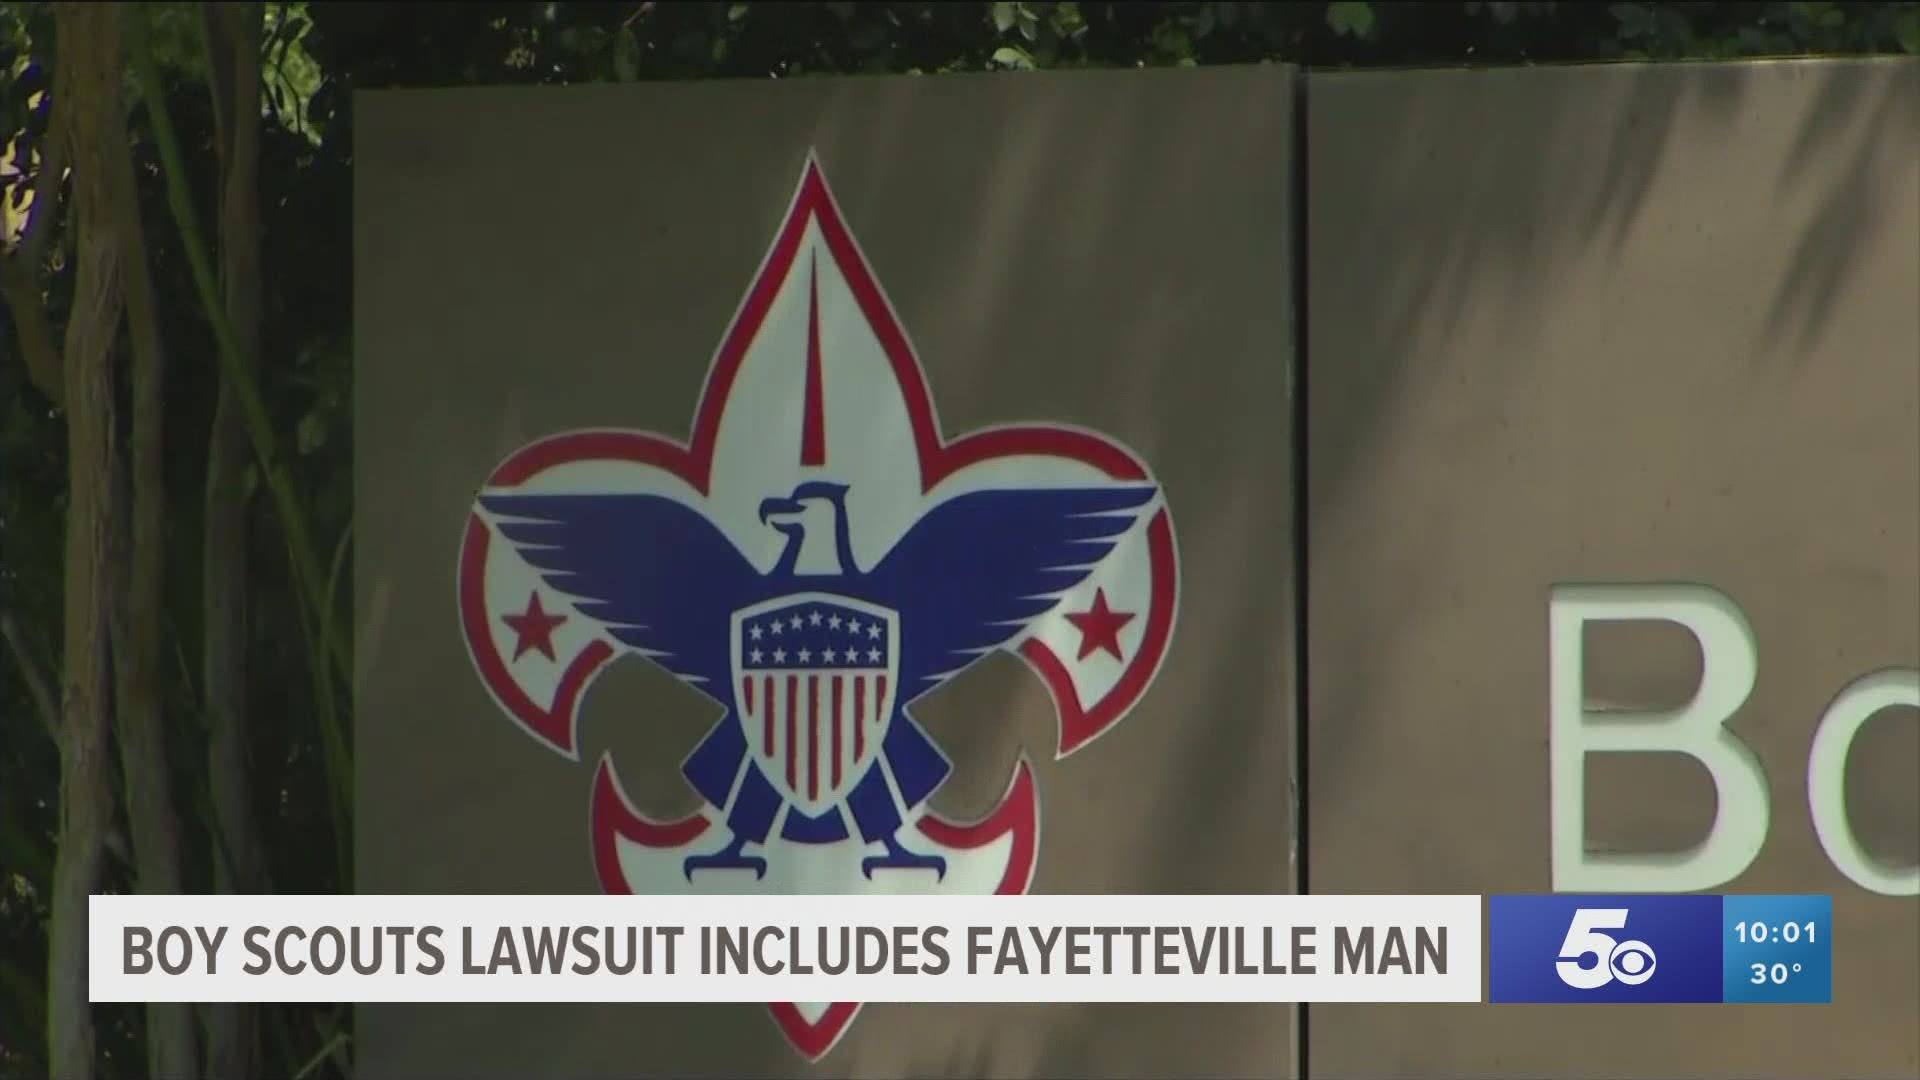 Boy Scouts lawsuit includes Fayetteville man